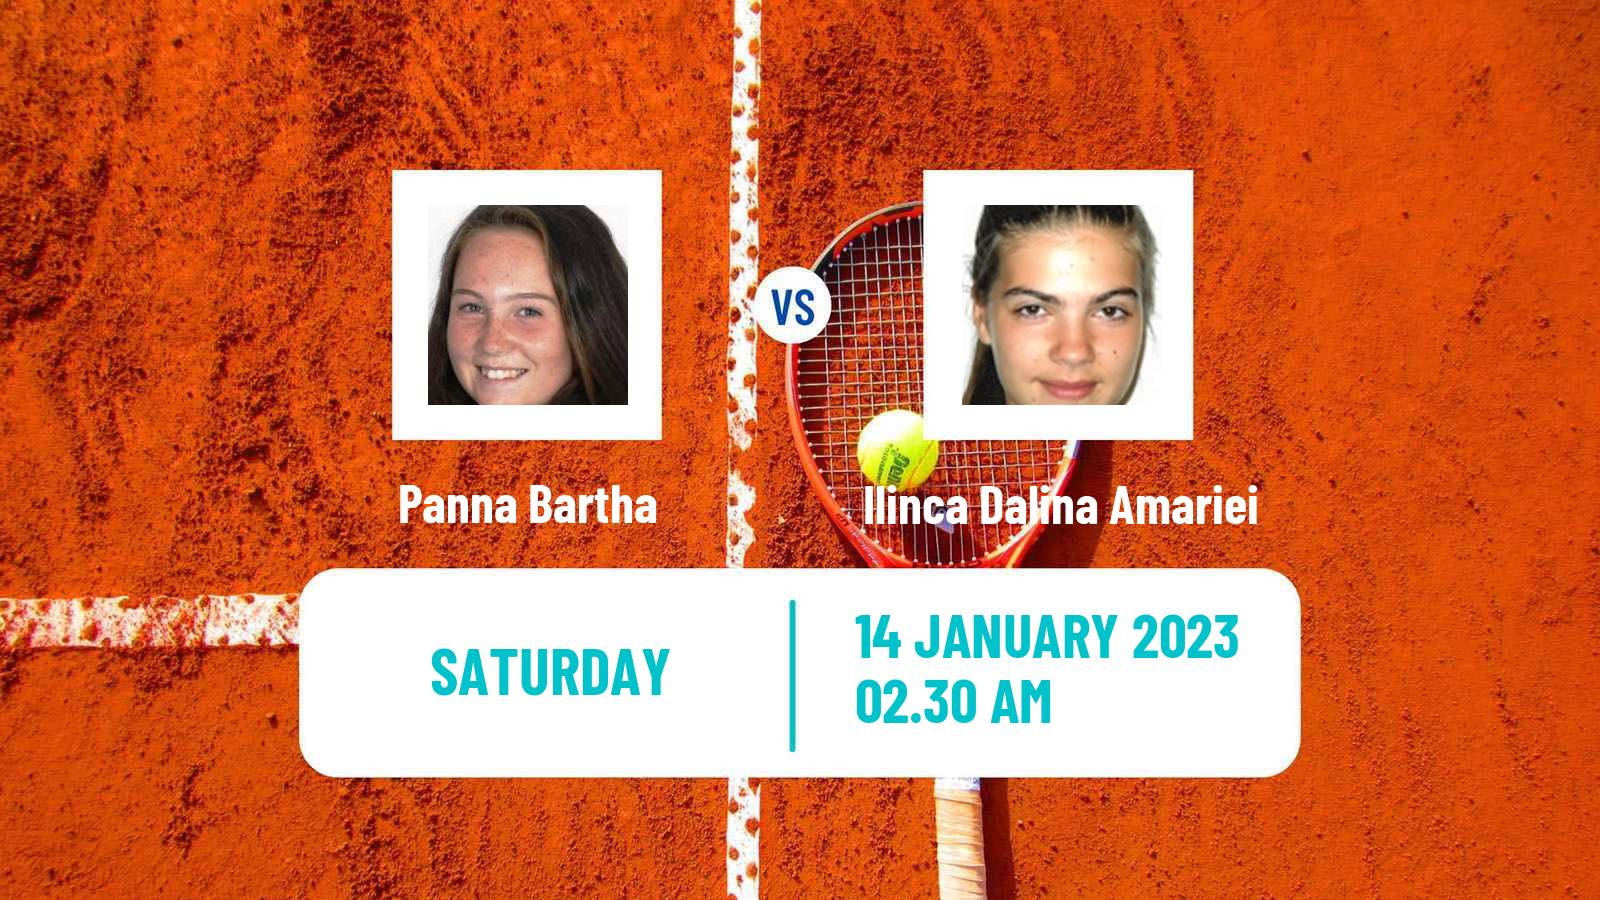 Tennis ITF Tournaments Panna Bartha - Ilinca Dalina Amariei